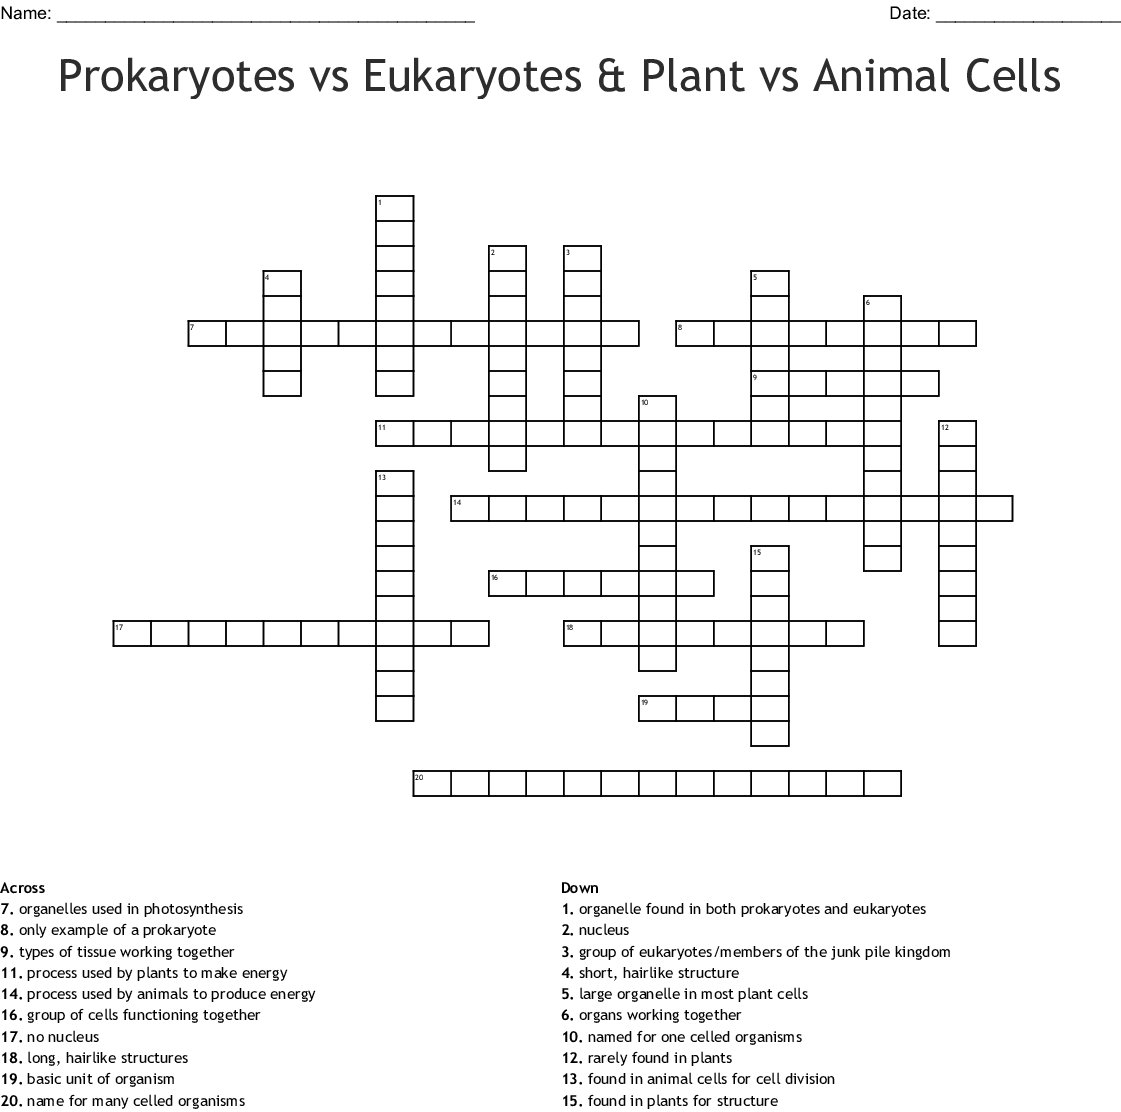 Prokaryotes Vs Eukaryotes Plant Vs Animal Cells Crossword — db-excel.com